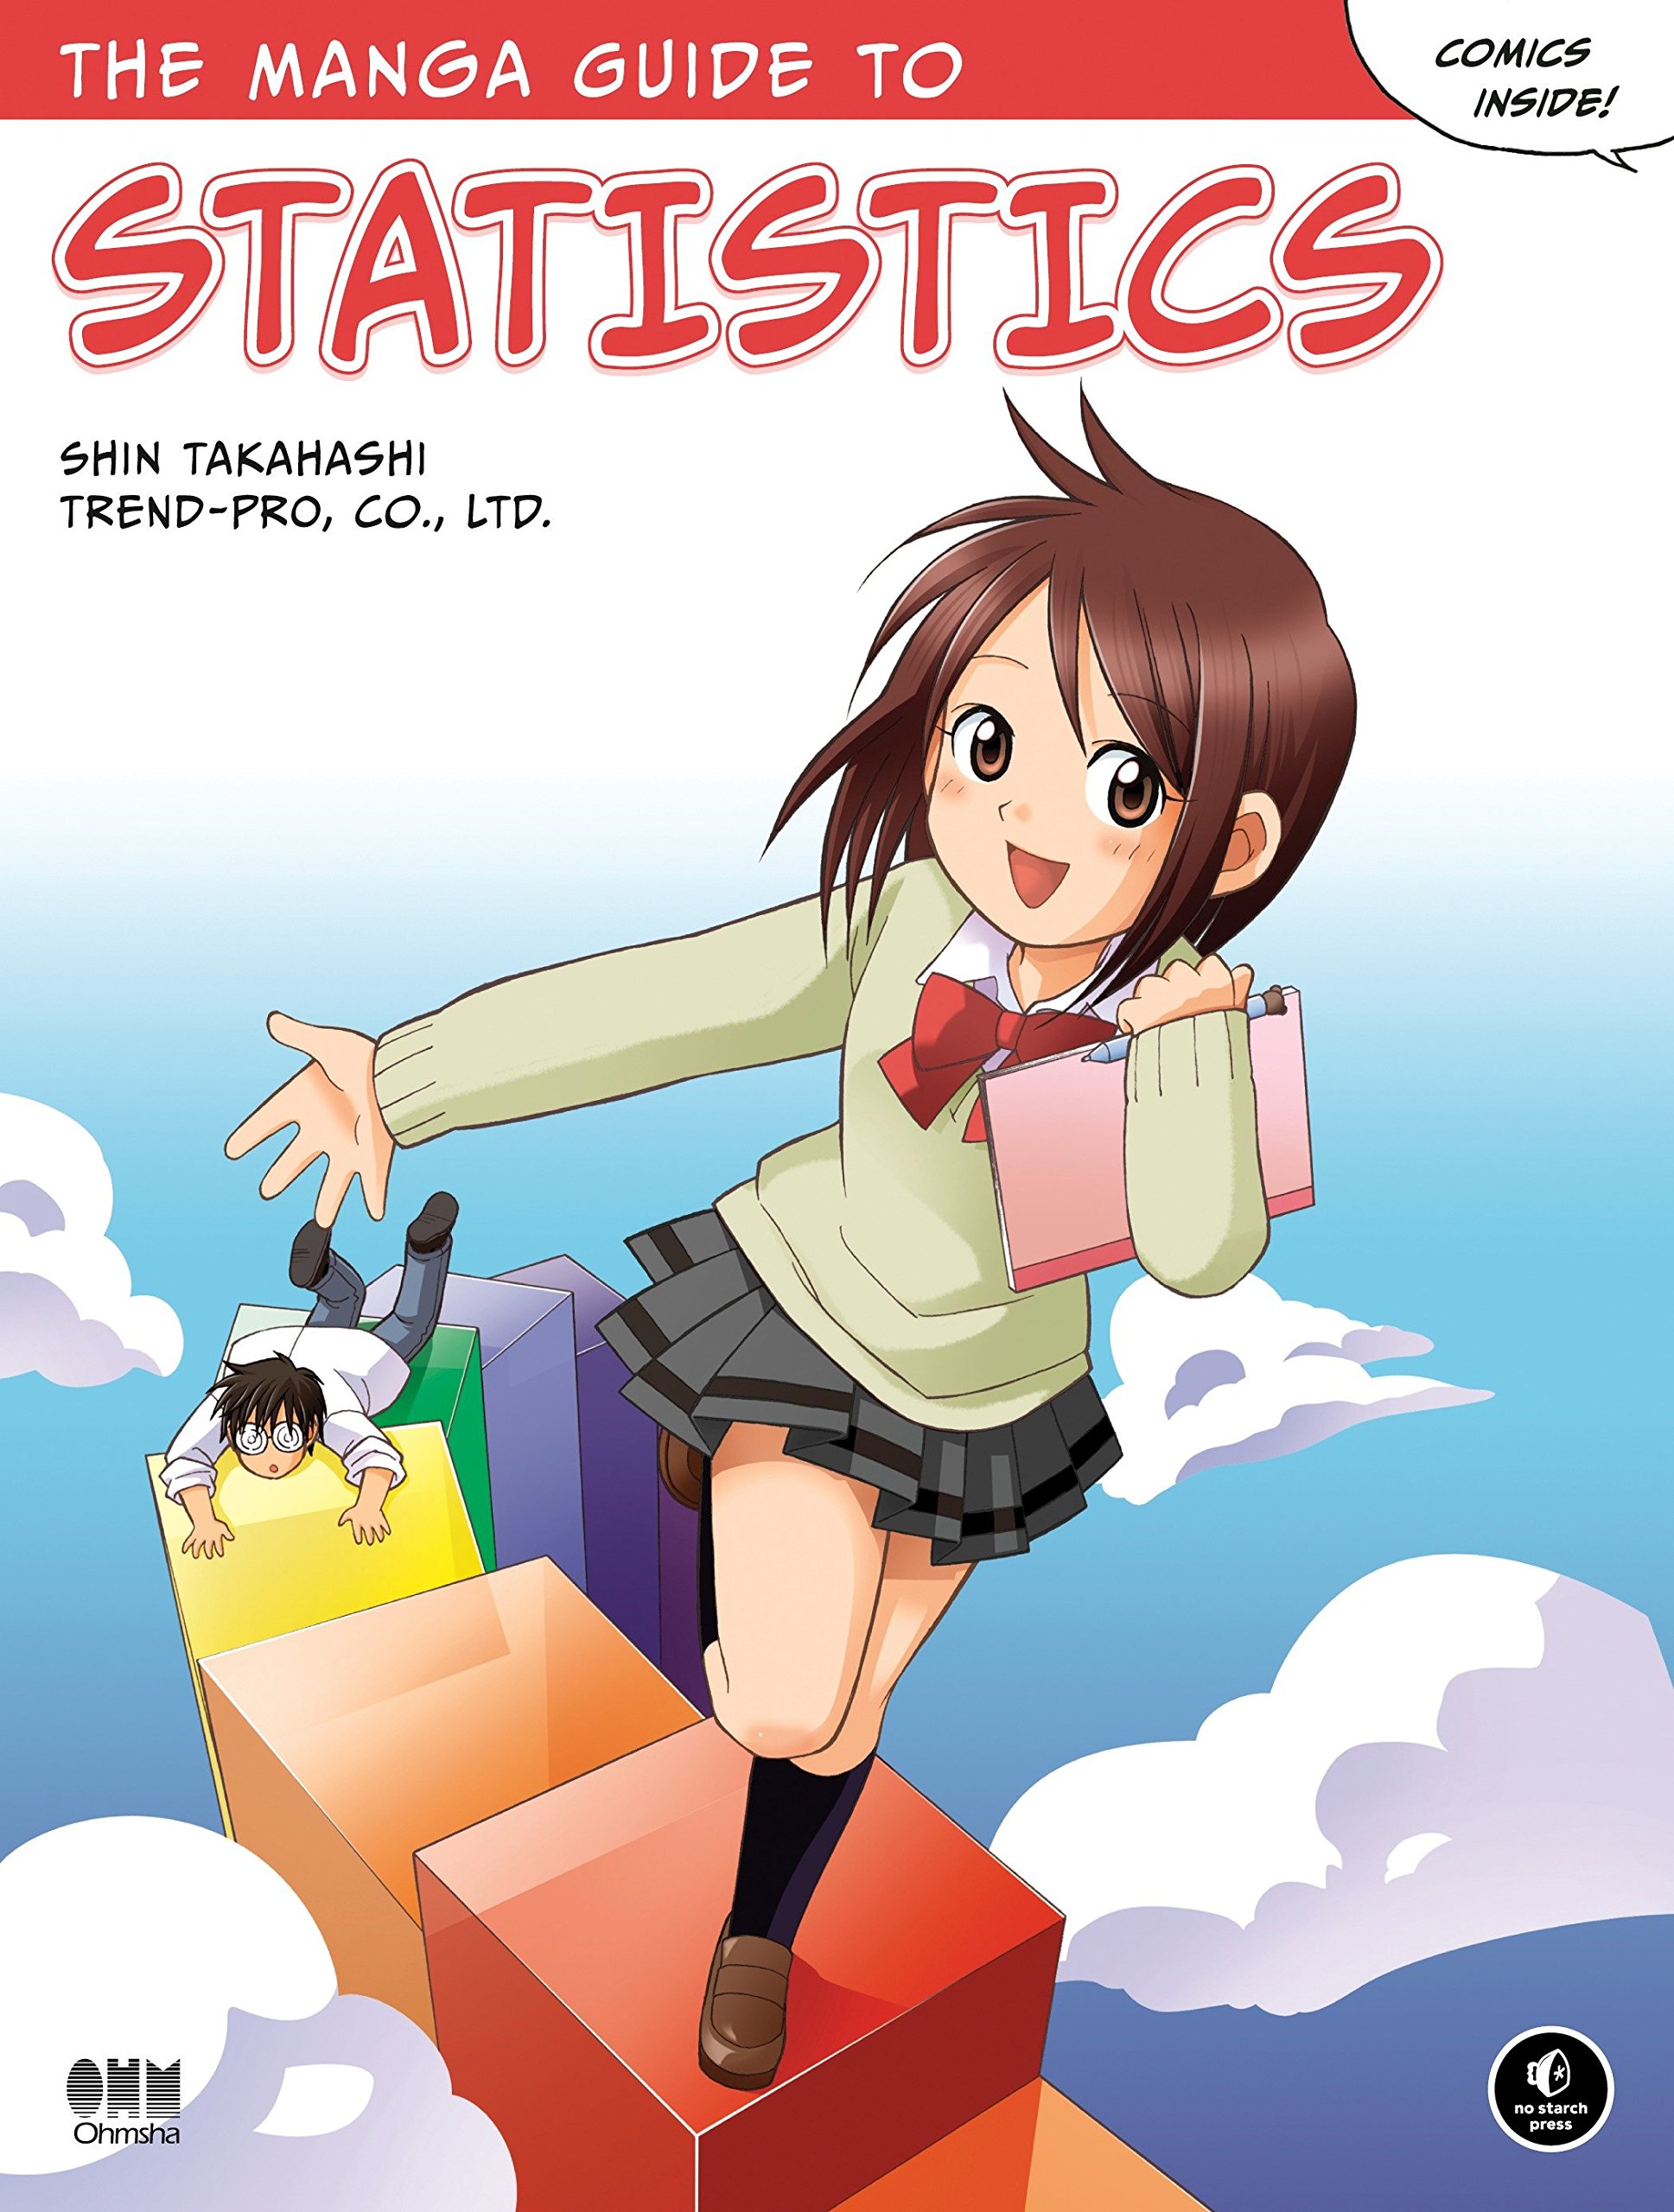 The manga guide to statistics.jpg